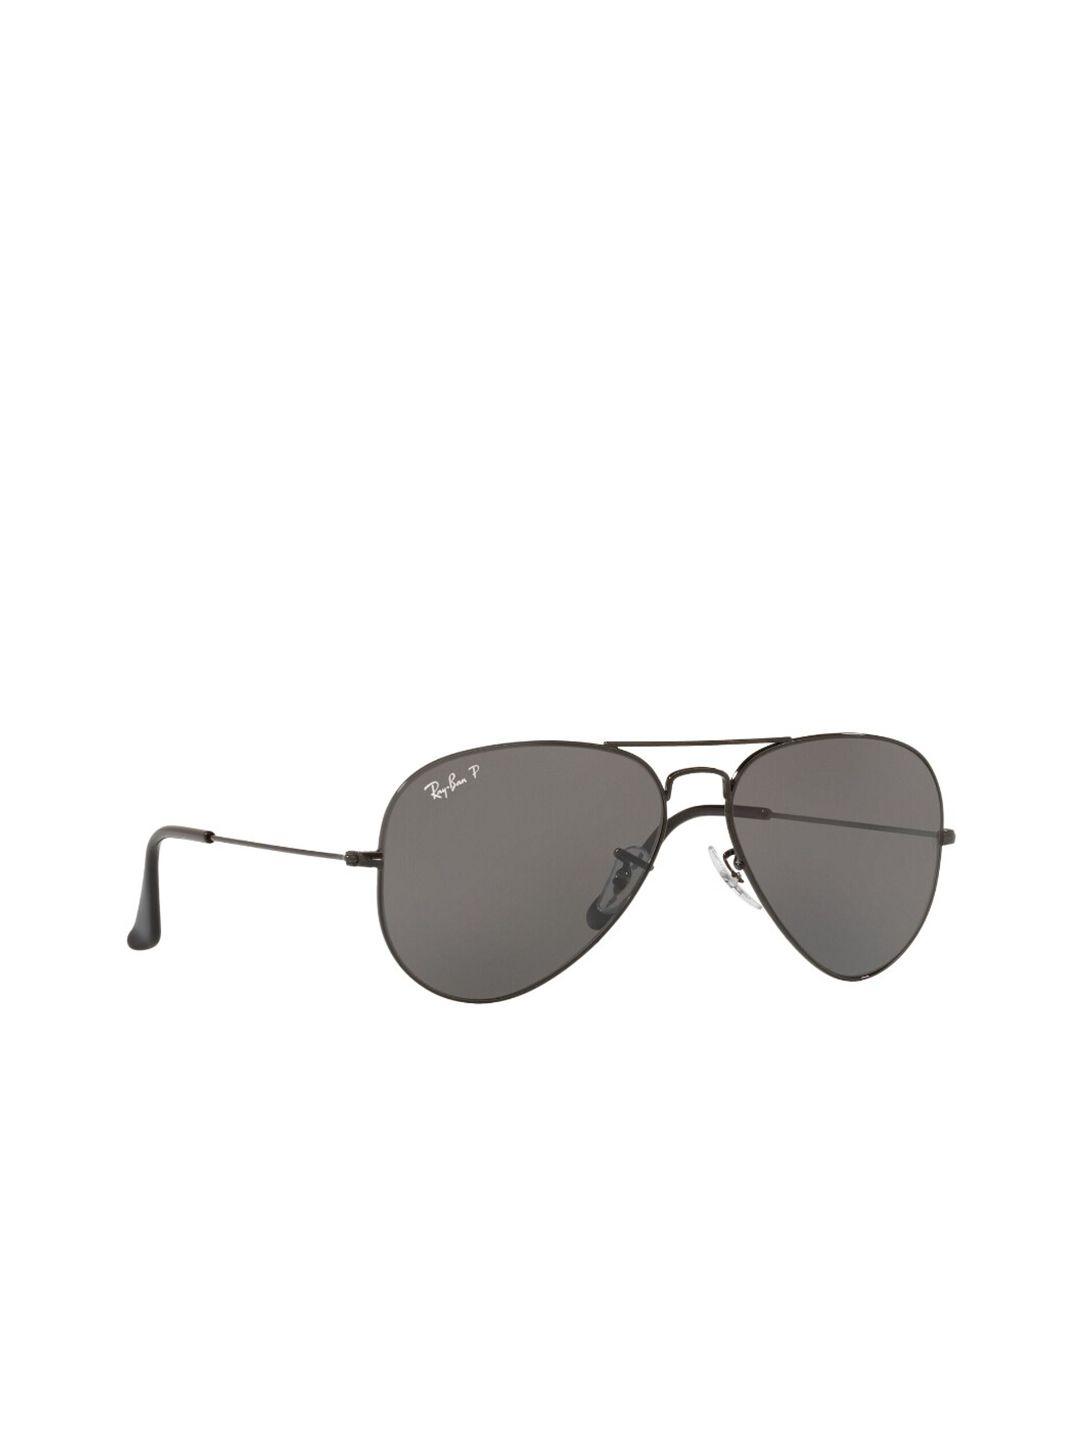 ray-ban unisex grey lens & black aviator sunglasses 8056597328111-grey